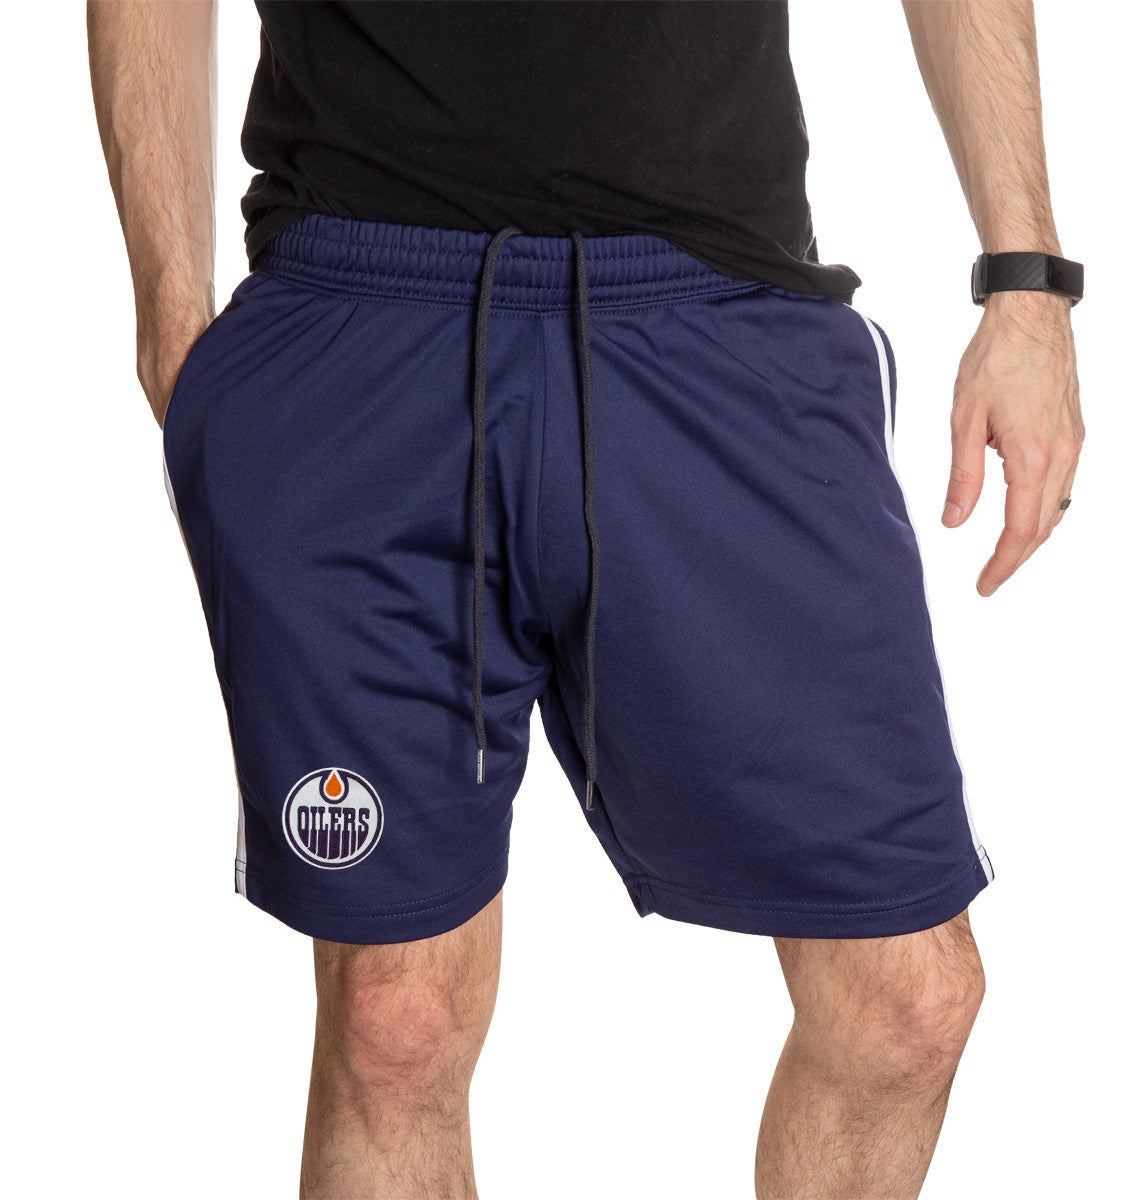 Edmonton Oilers Two-Stripe Shorts for Men